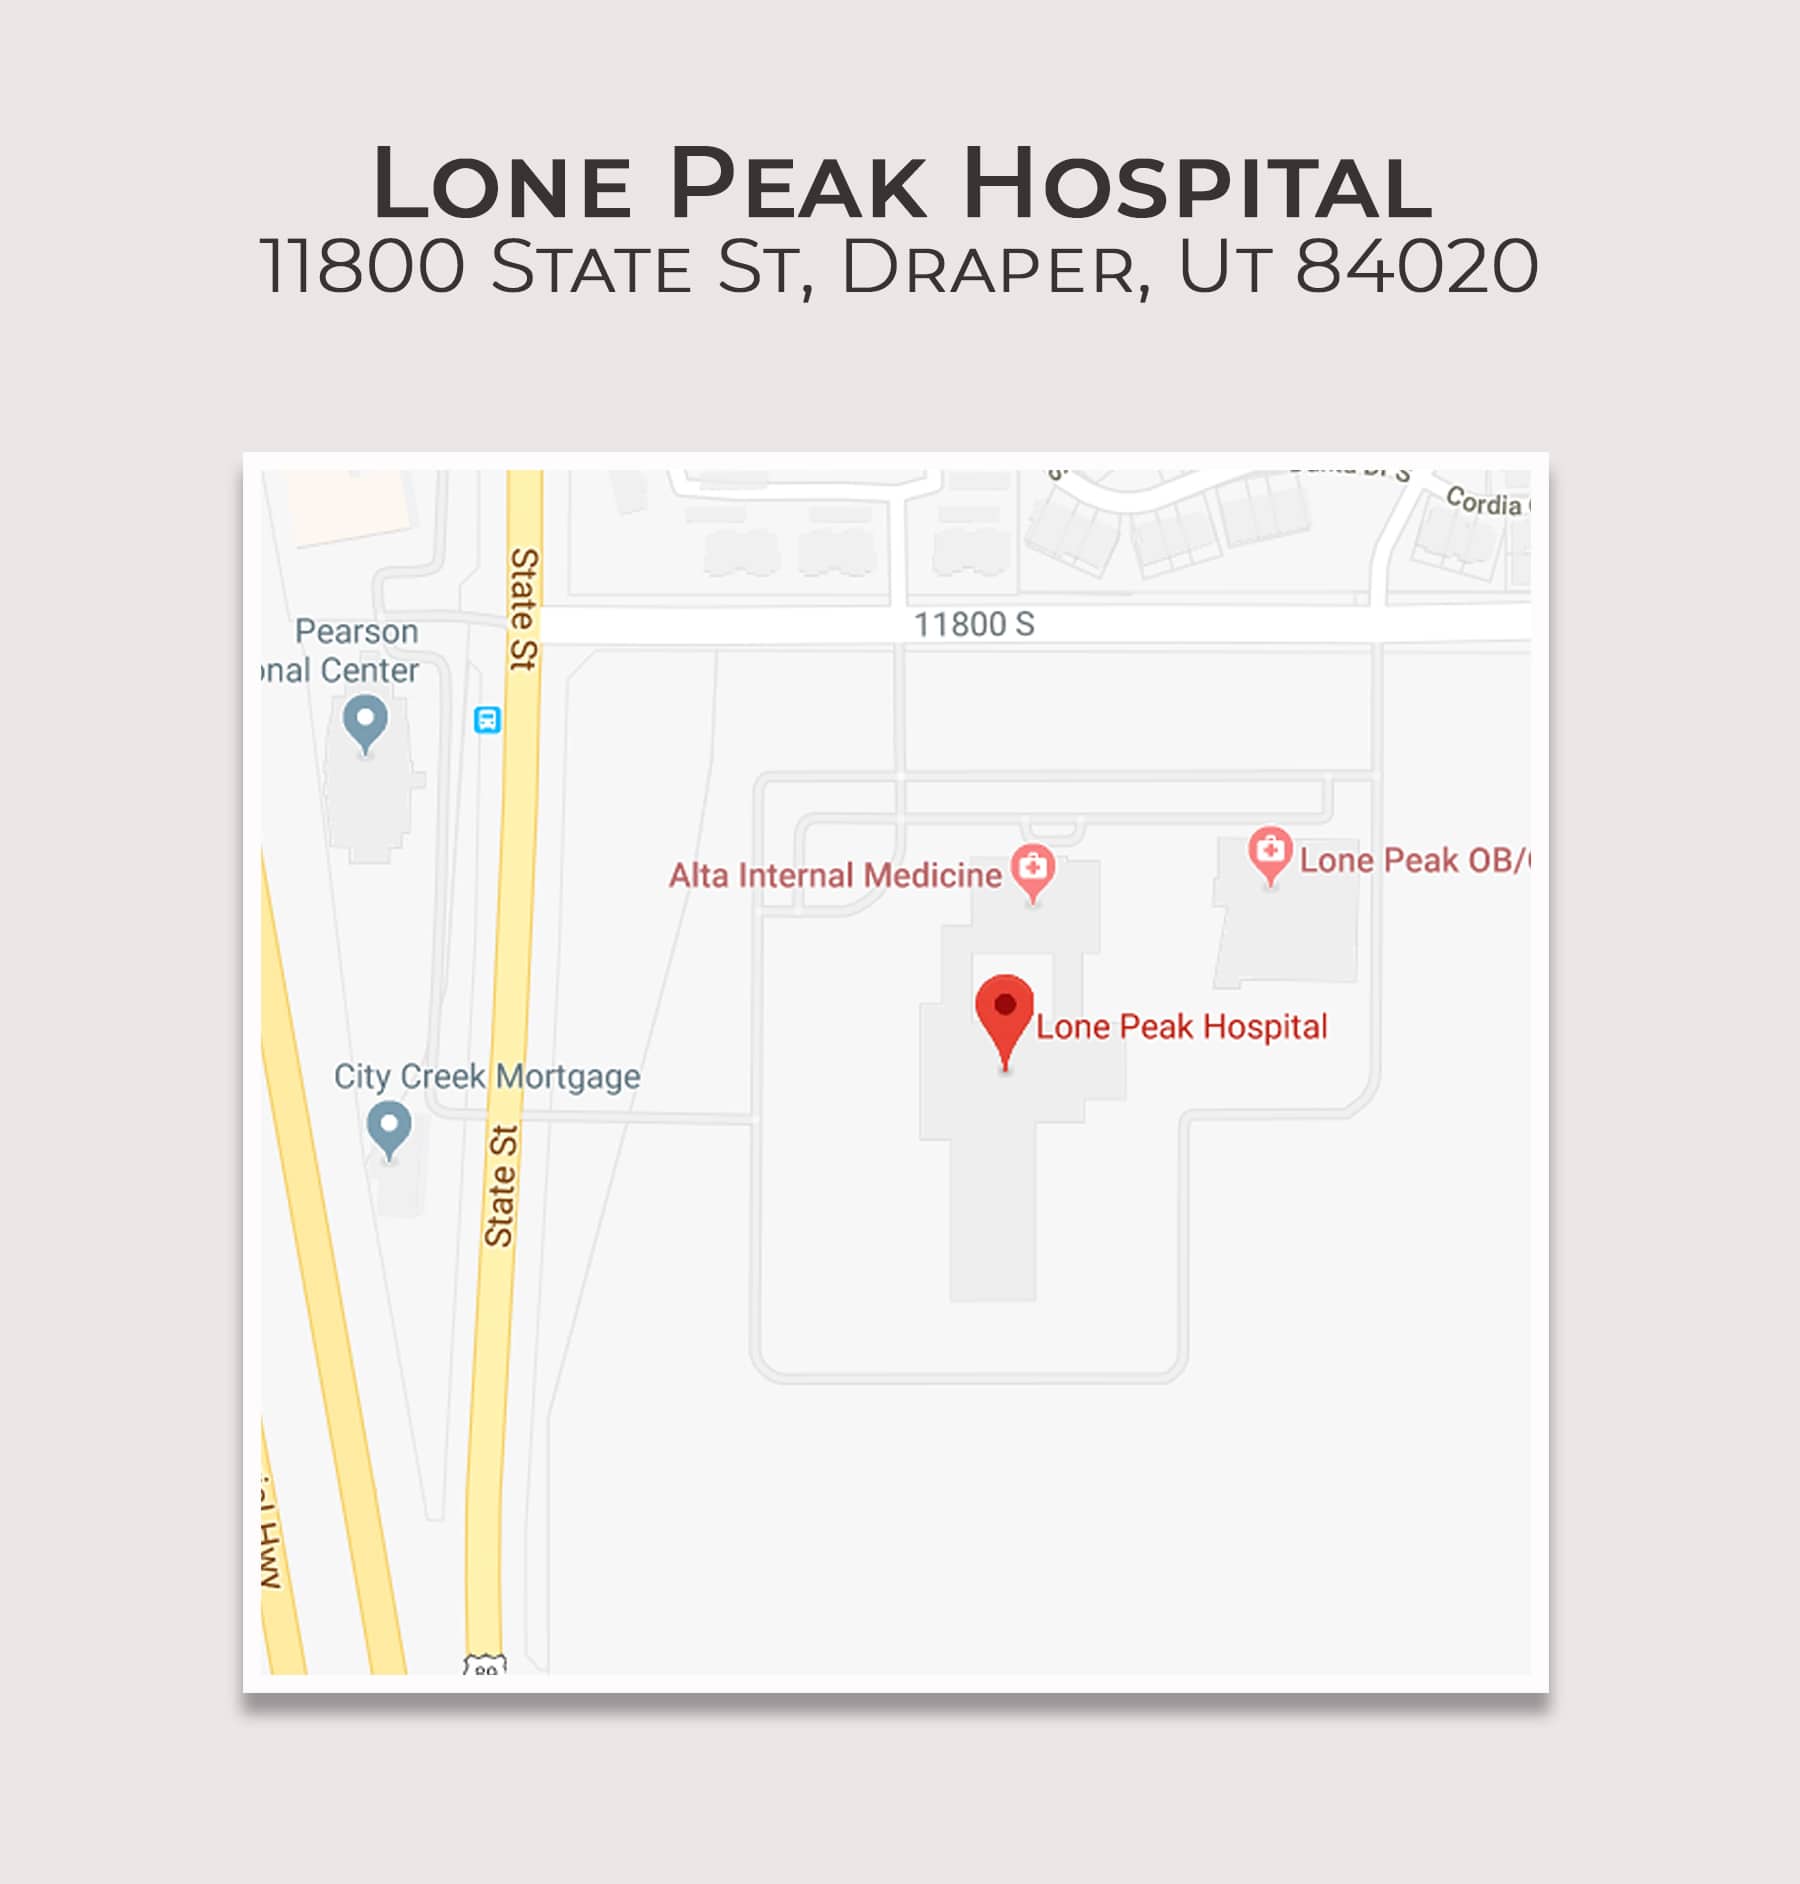 Lone peak hospital